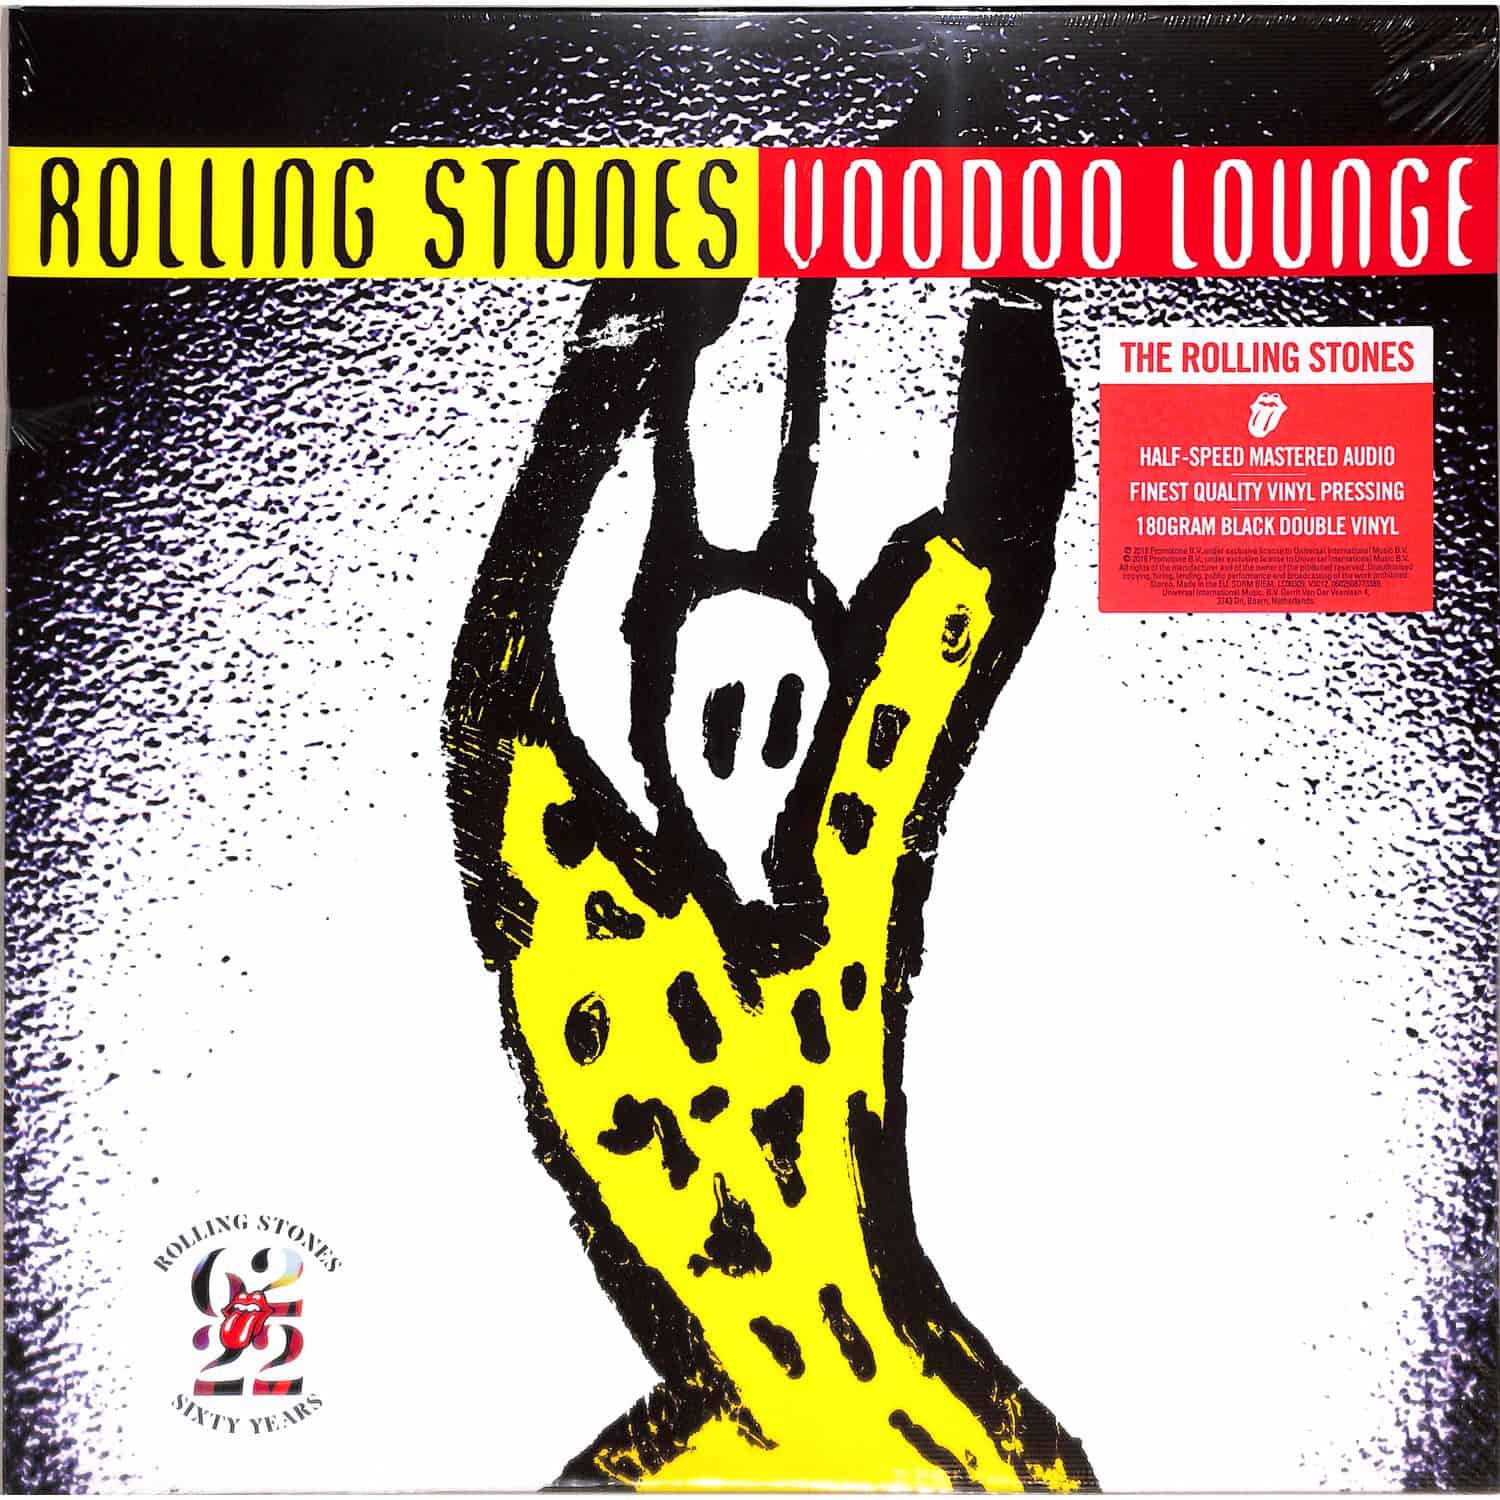 The Rolling Stones - VOODOO LOUNGE 